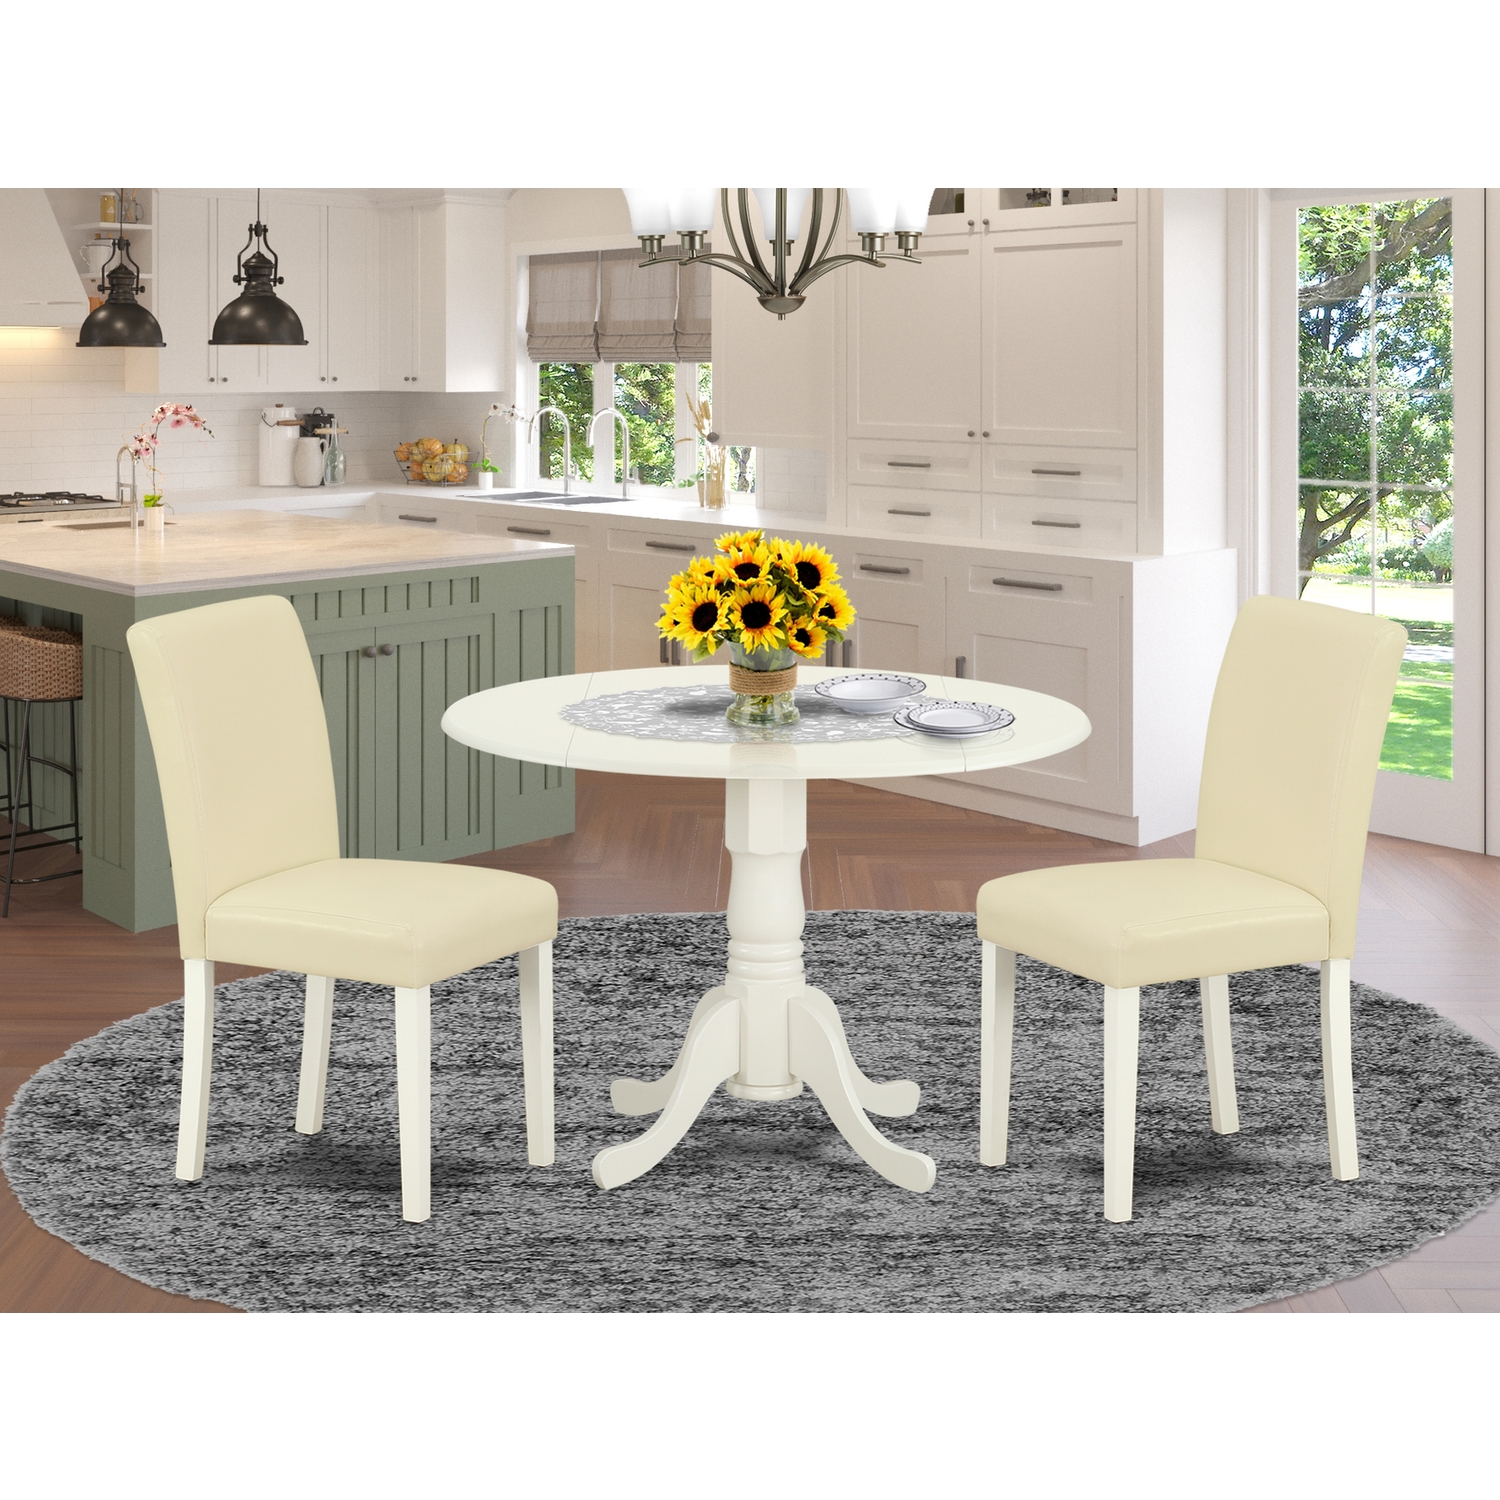 East West Furniture Dining Room Set Linen White, DLAB3-LWH-64 - image 1 of 5